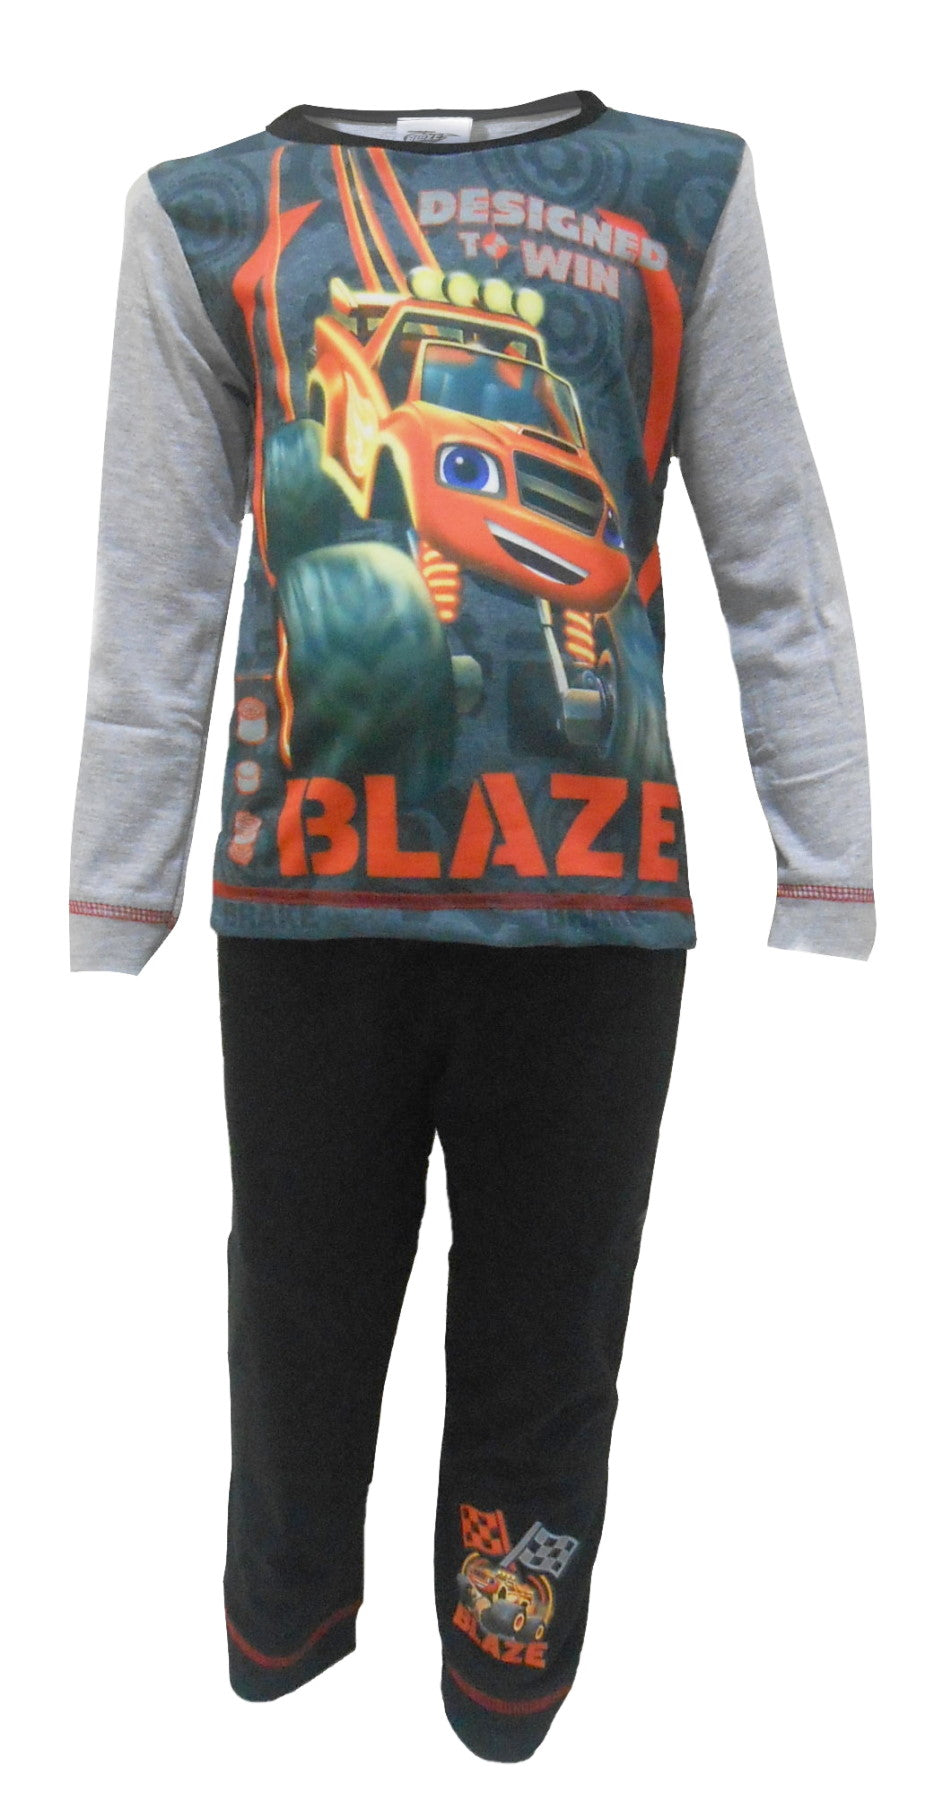 Blaze and the Monster Machines "Win" Boys Pyjamas 18-24 Months